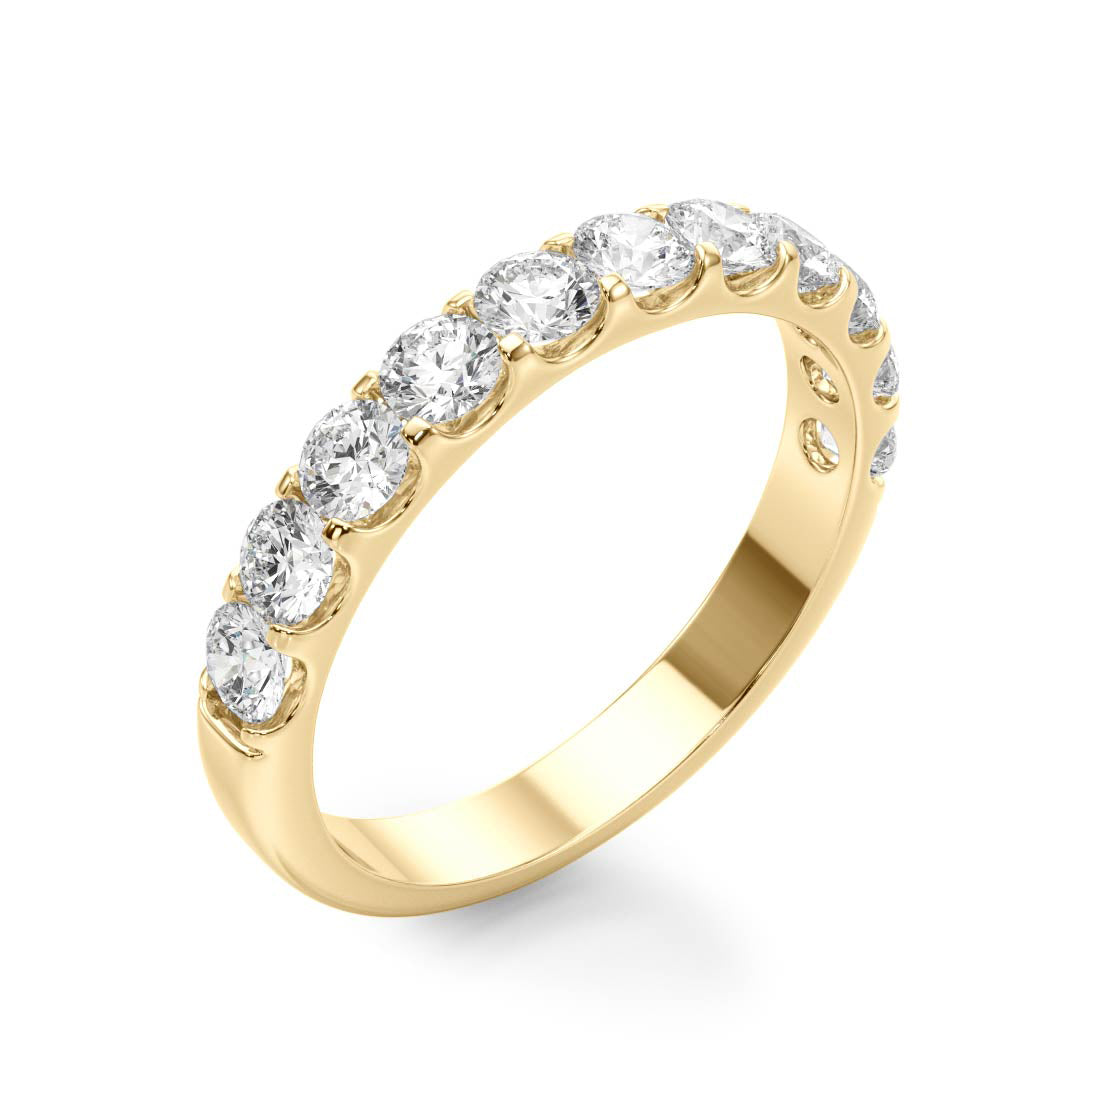 1.0 Carat Round Diamond Classic Wedding Ring, Shared Prong Style